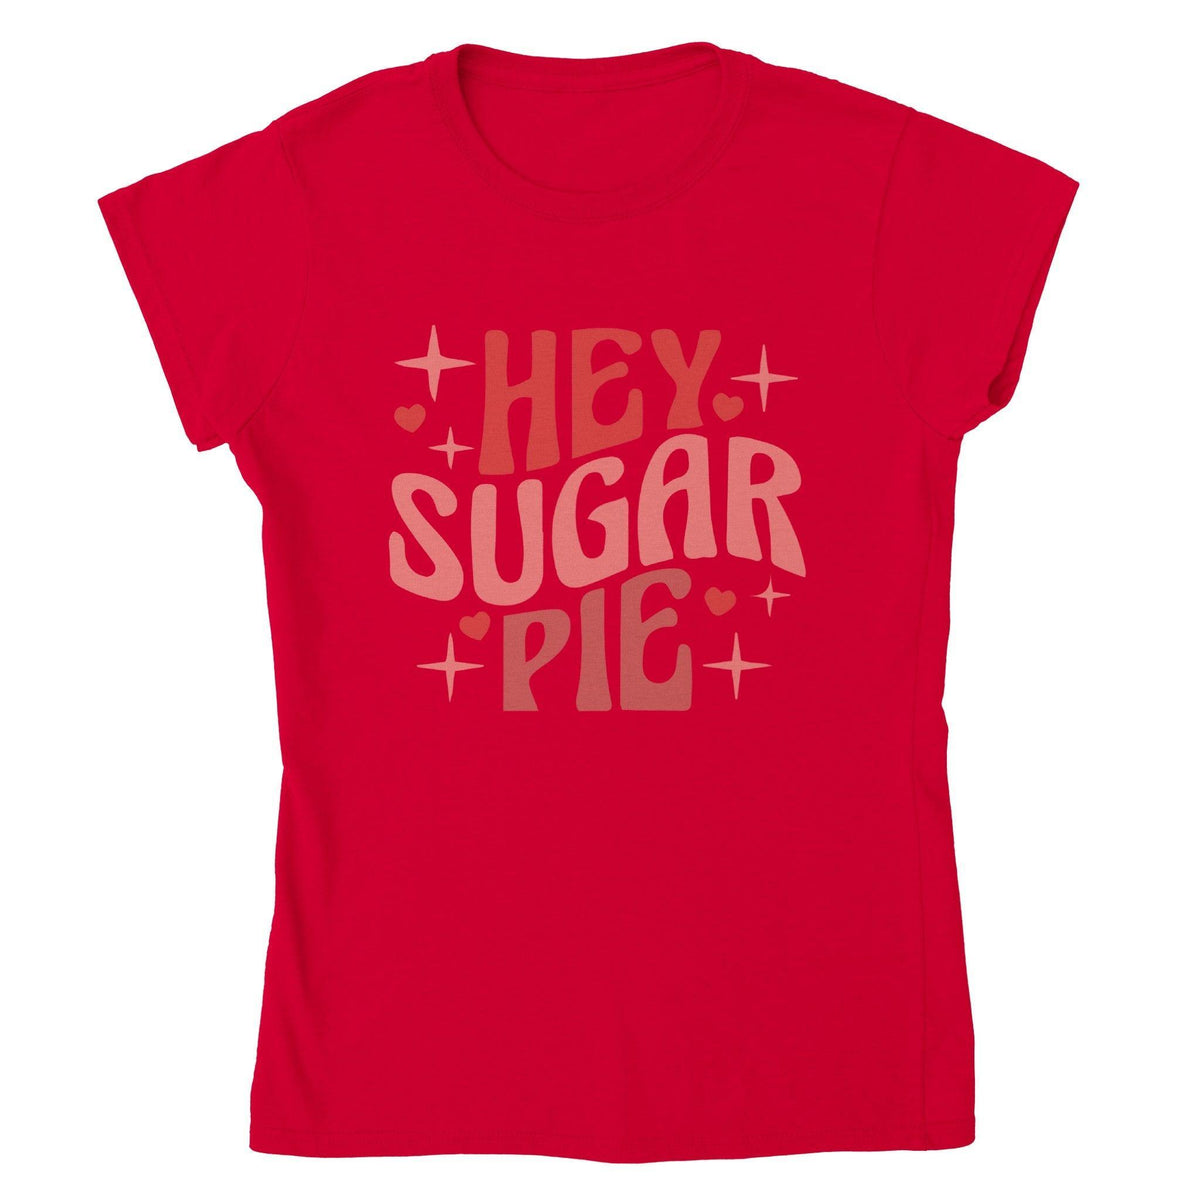 HEY SUGAR PIE T-shirt-Regular Fit Tee-StylinArts